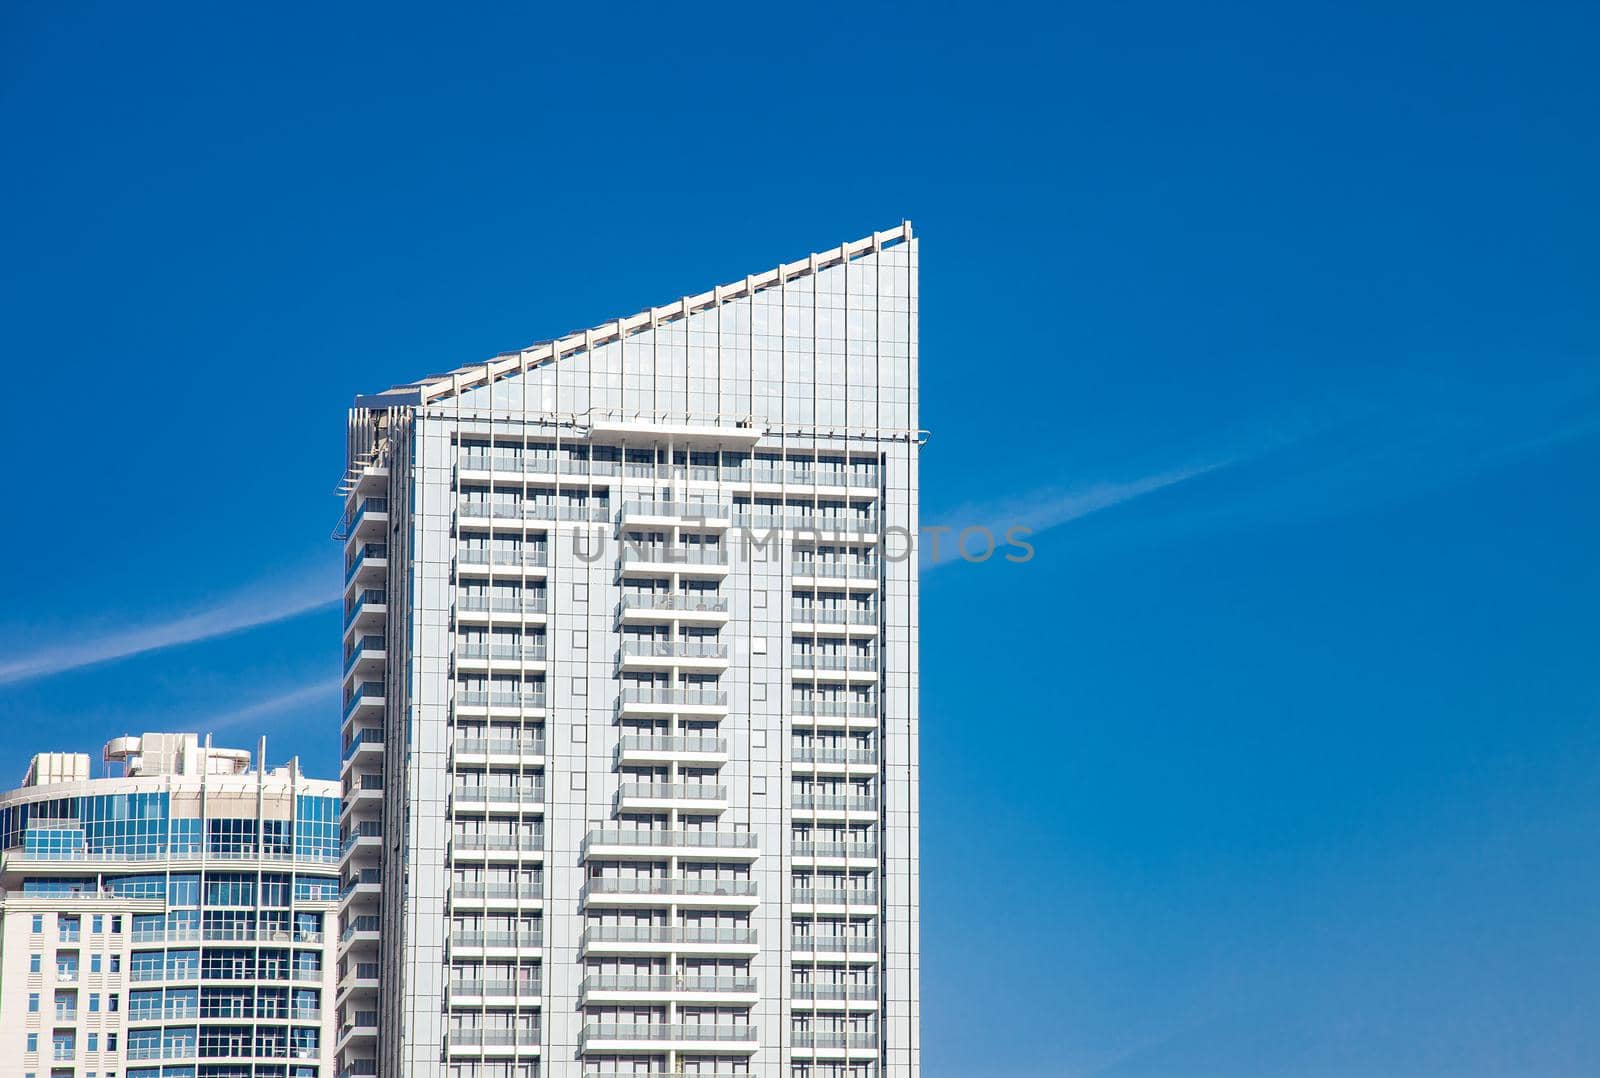 Urban Building Scyscraper Top on Blue Sky by kisika